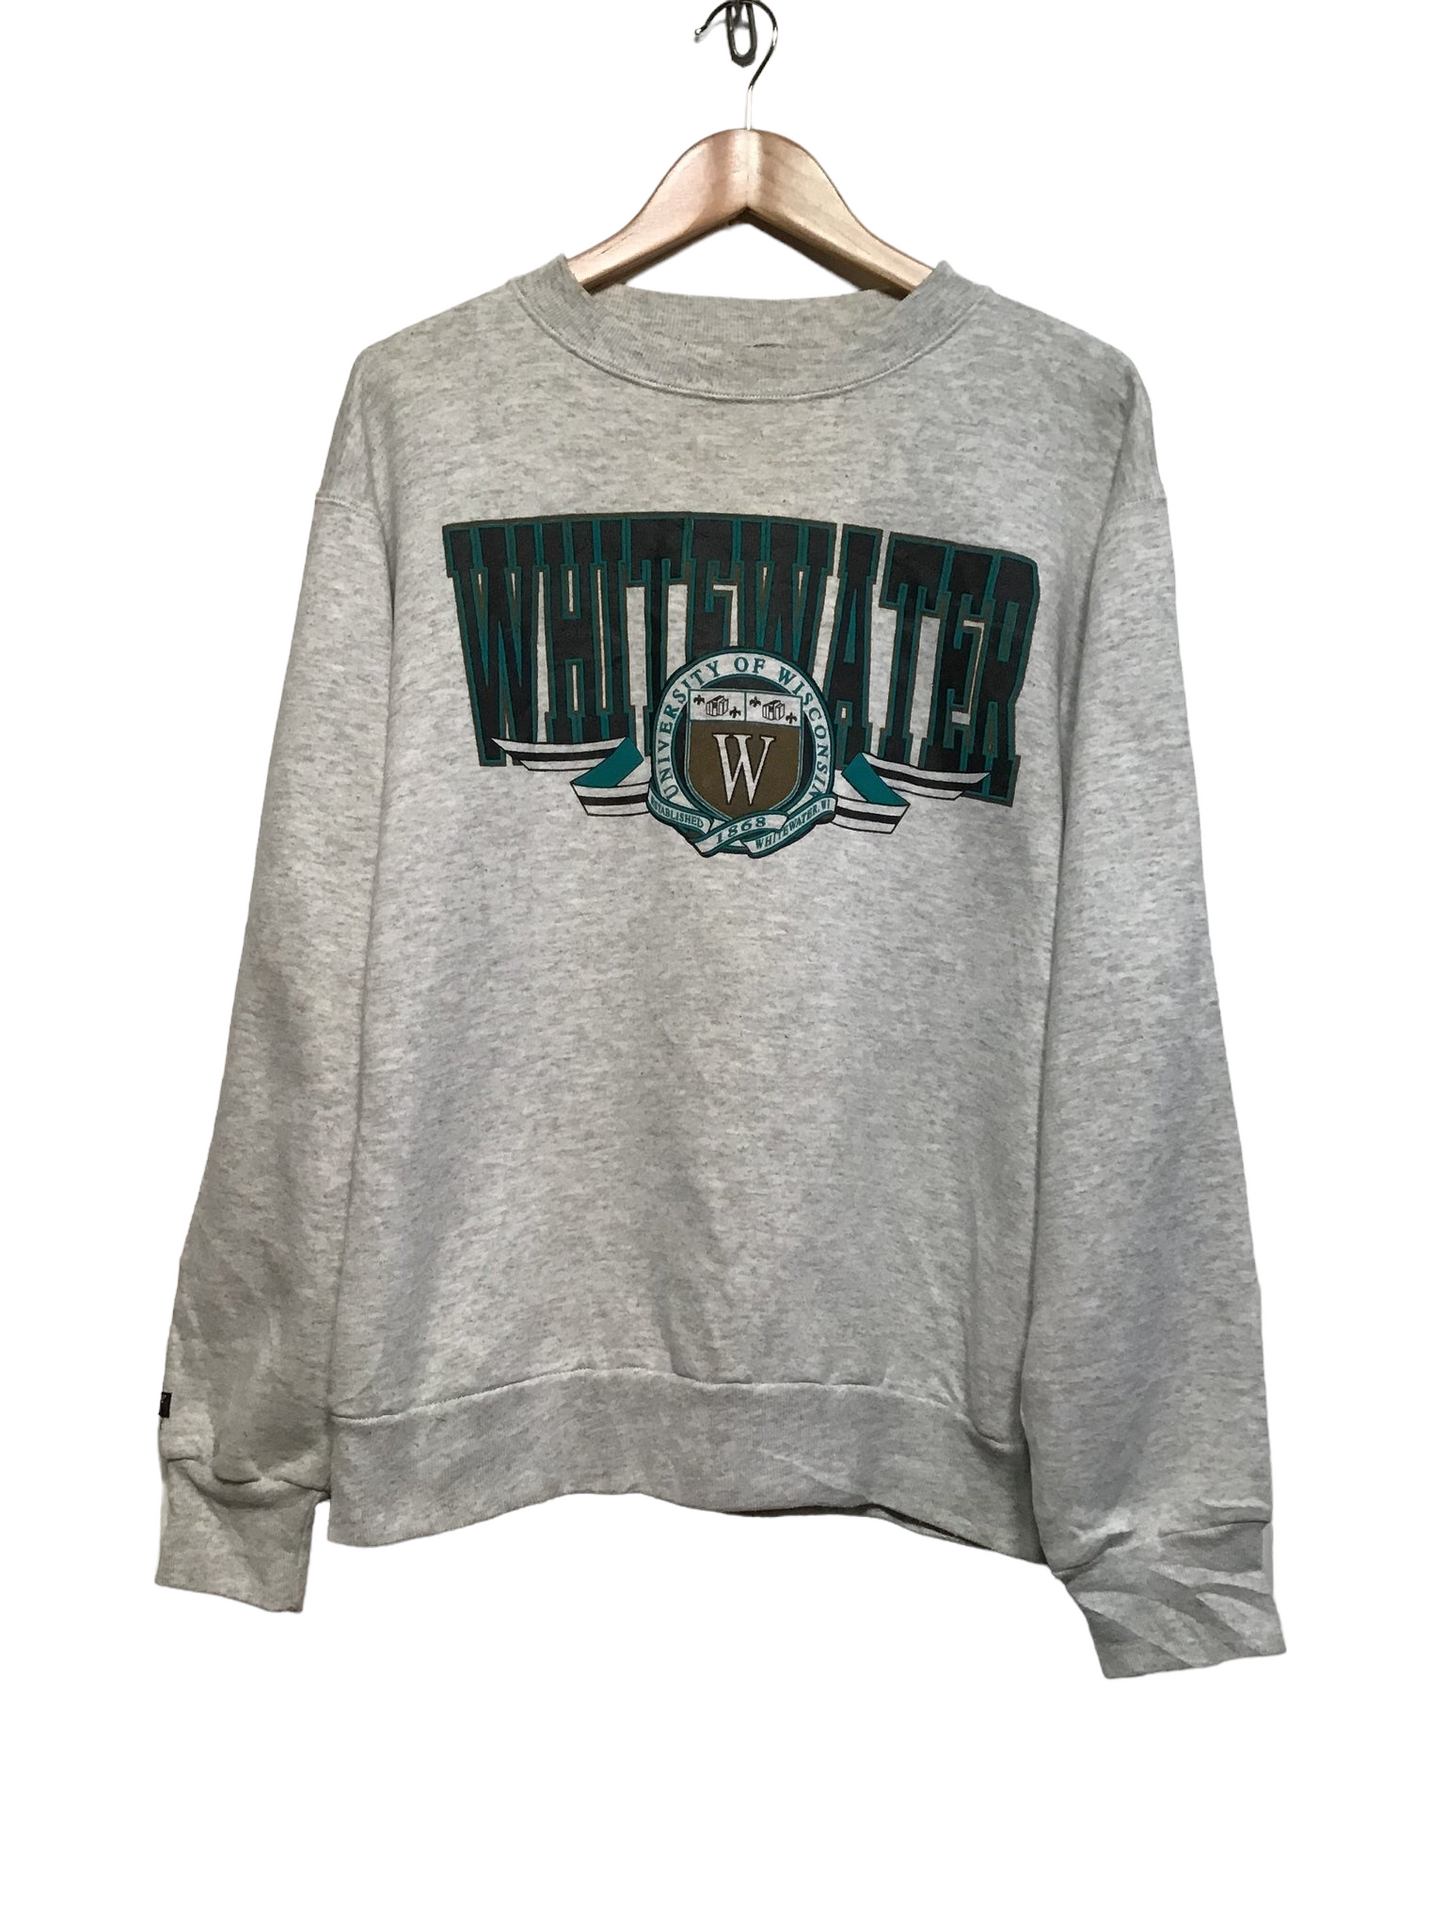 University Of Wisconsin Sweatshirt (Size S)